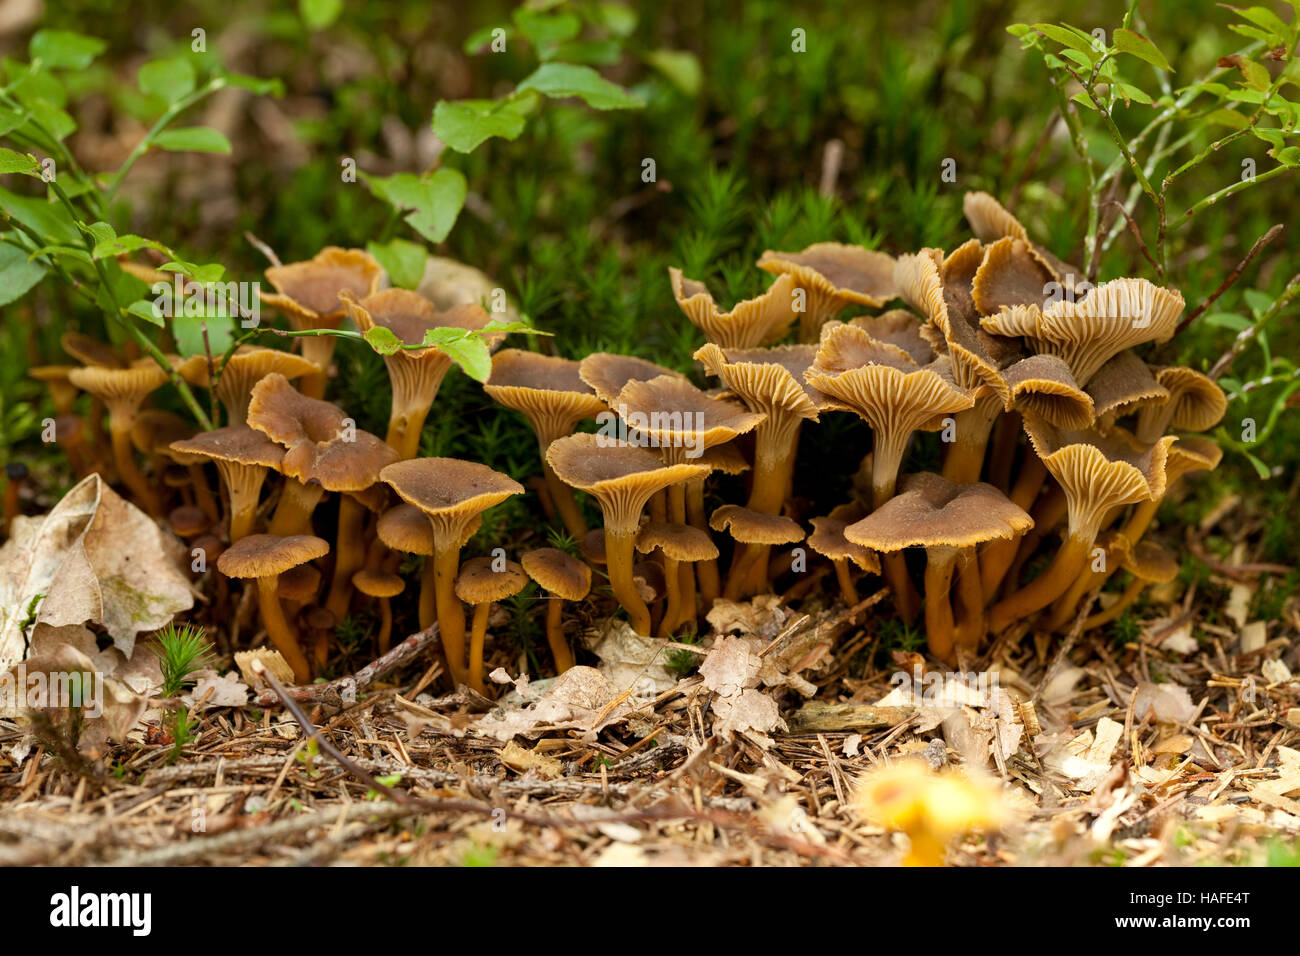 large group mushrooms (Craterellus tubaeformis) in natural environment Stock Photo